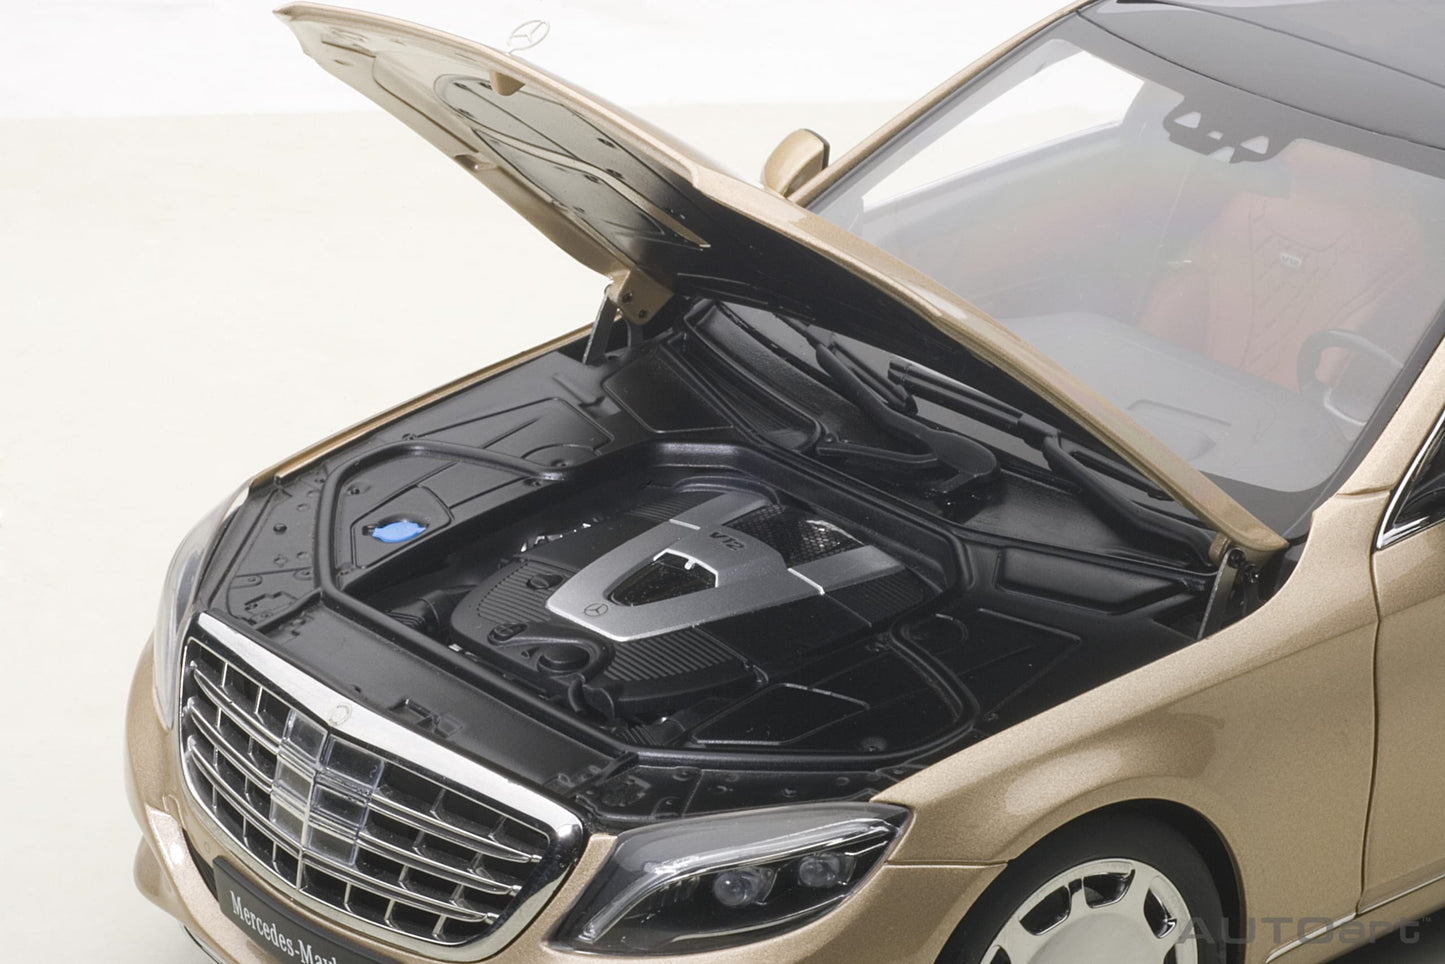 AUTOart 1:18 Mercedes-Maybach S-Klasse S600 (SWB) (Champagne Gold) 76294